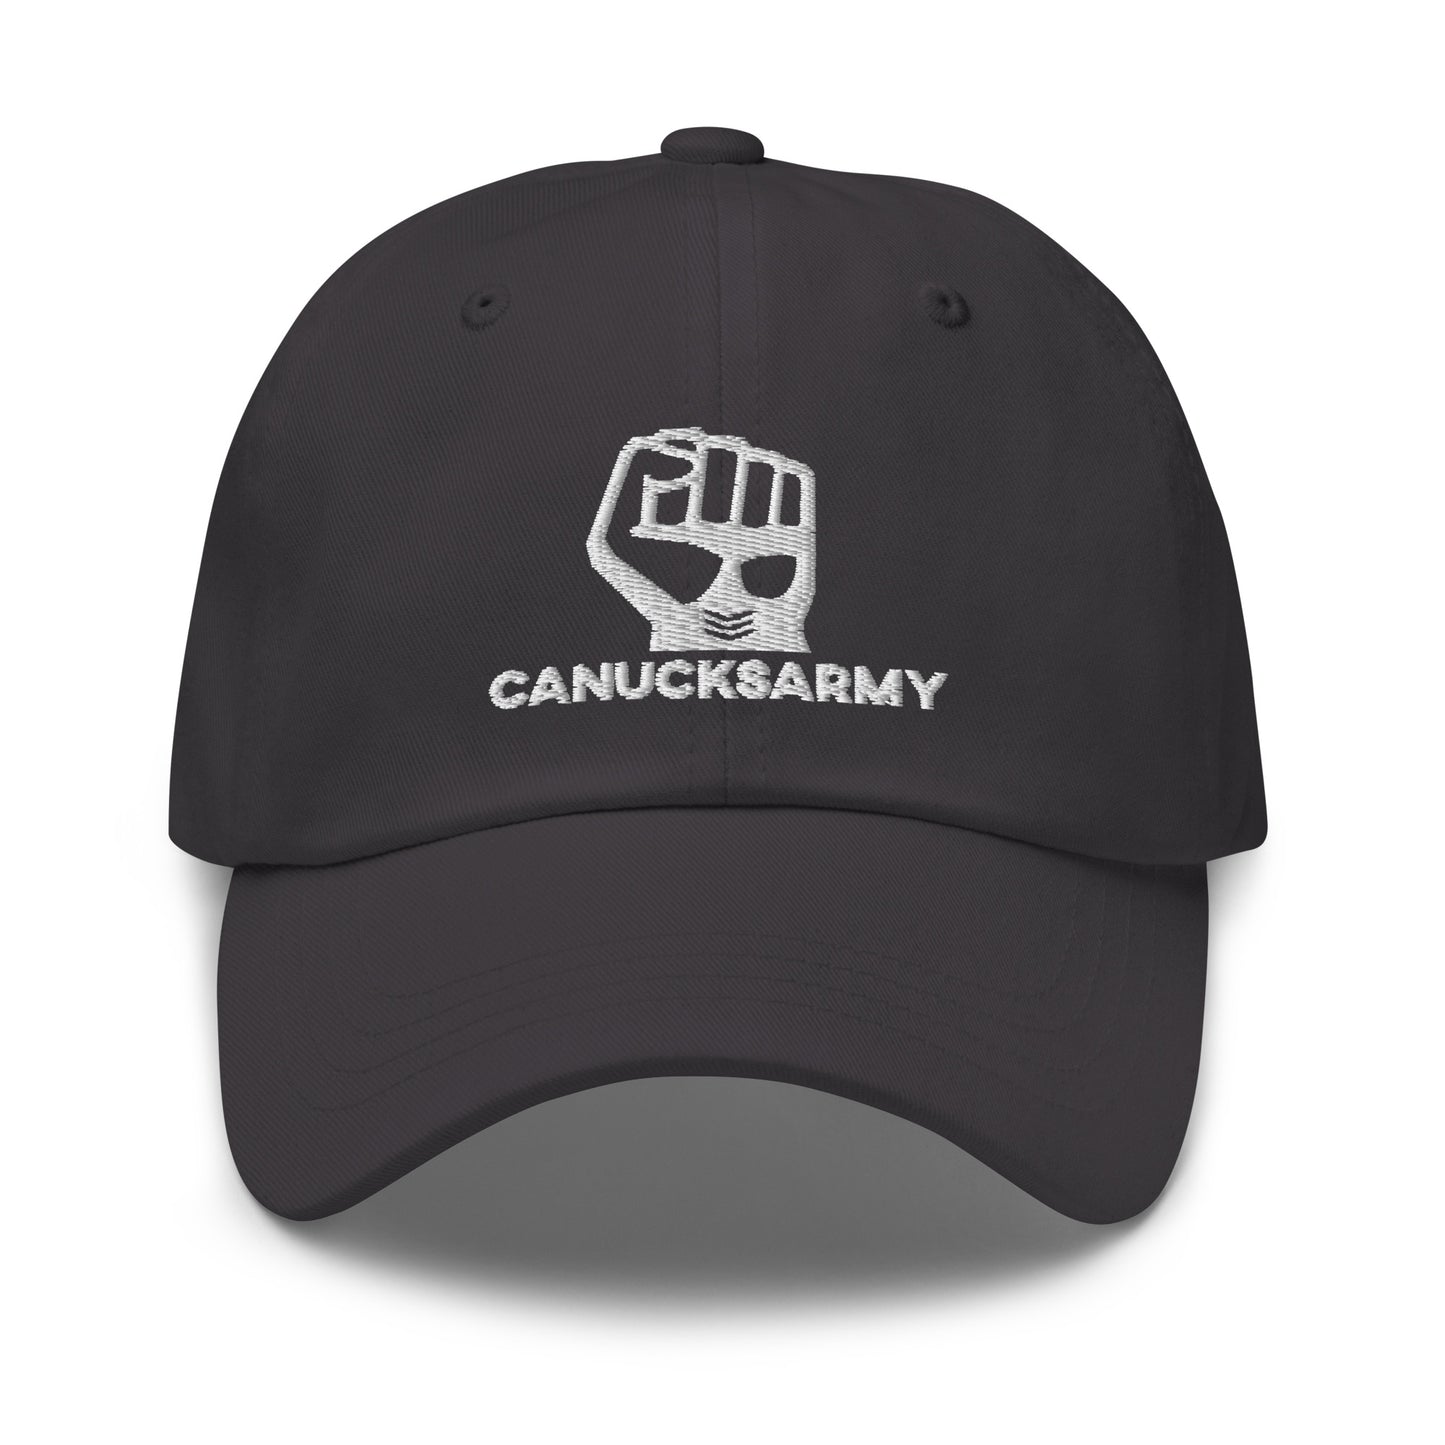 THE CLASSICS - Canucksarmy Dad Hat